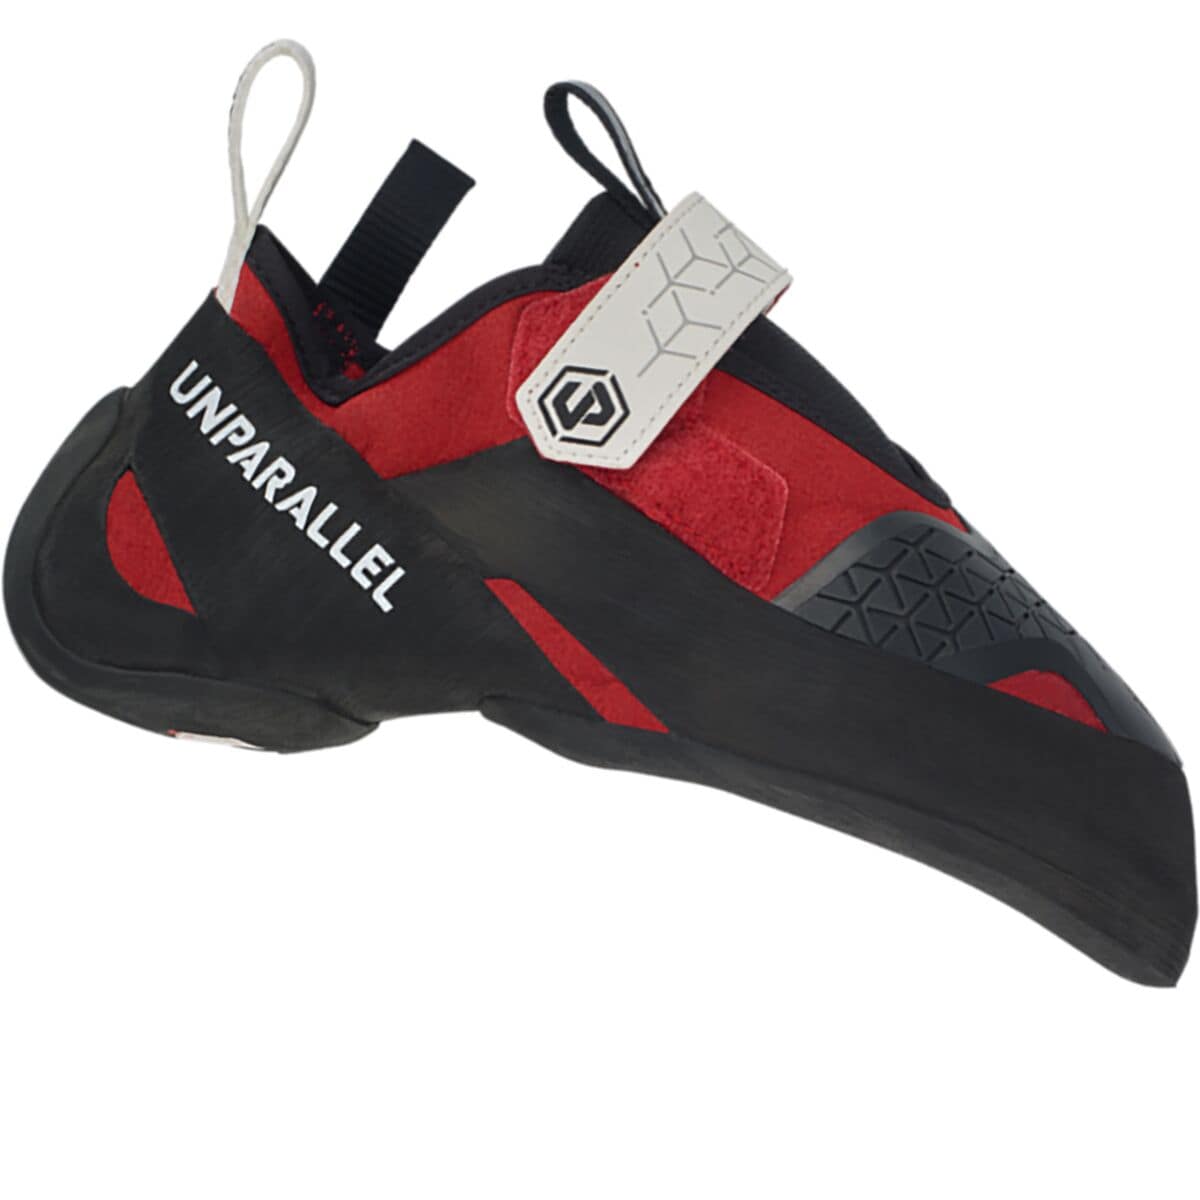 UnParallel Flagship Shoe